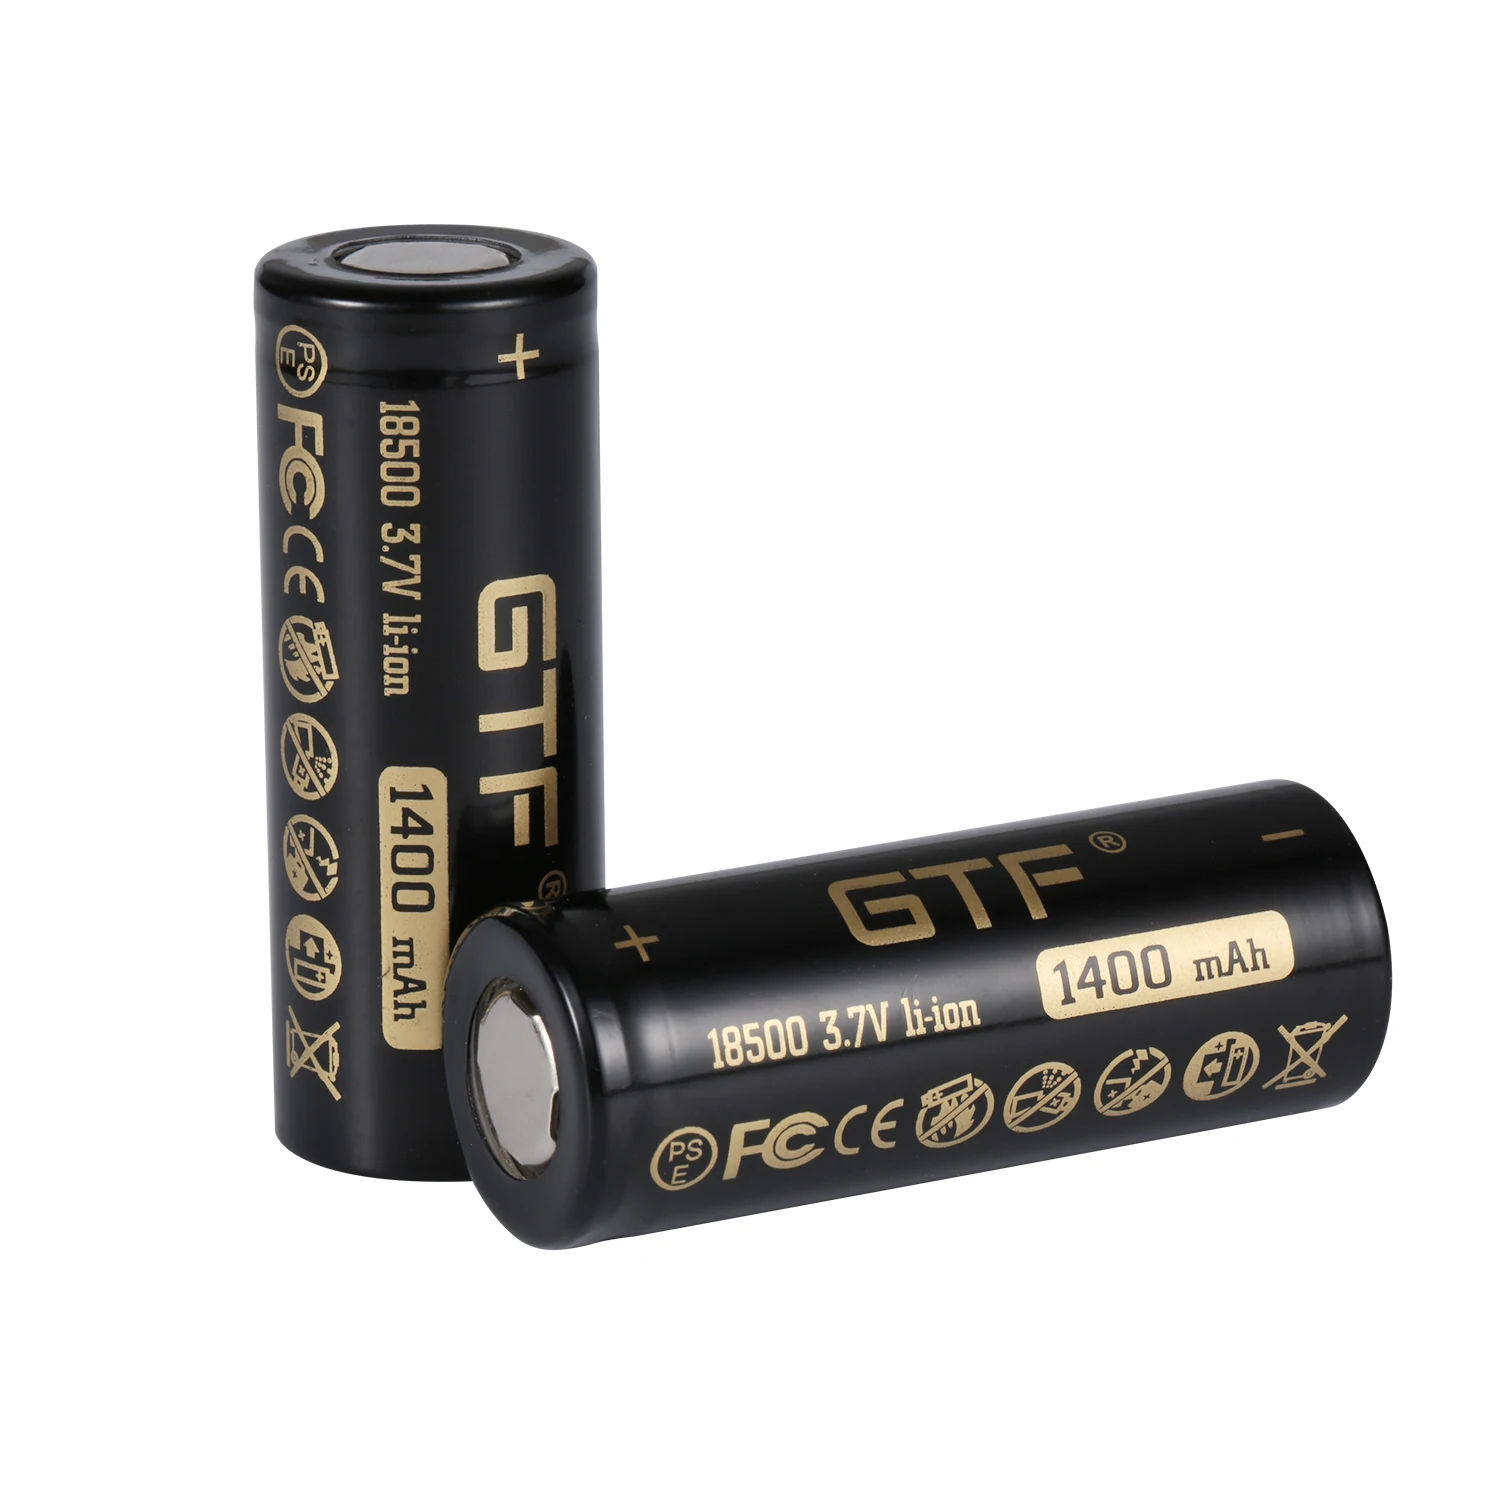 Gtf 3.7v 18500 1400mah 1500mah 1600mah Battery Cell Rechargeable ...